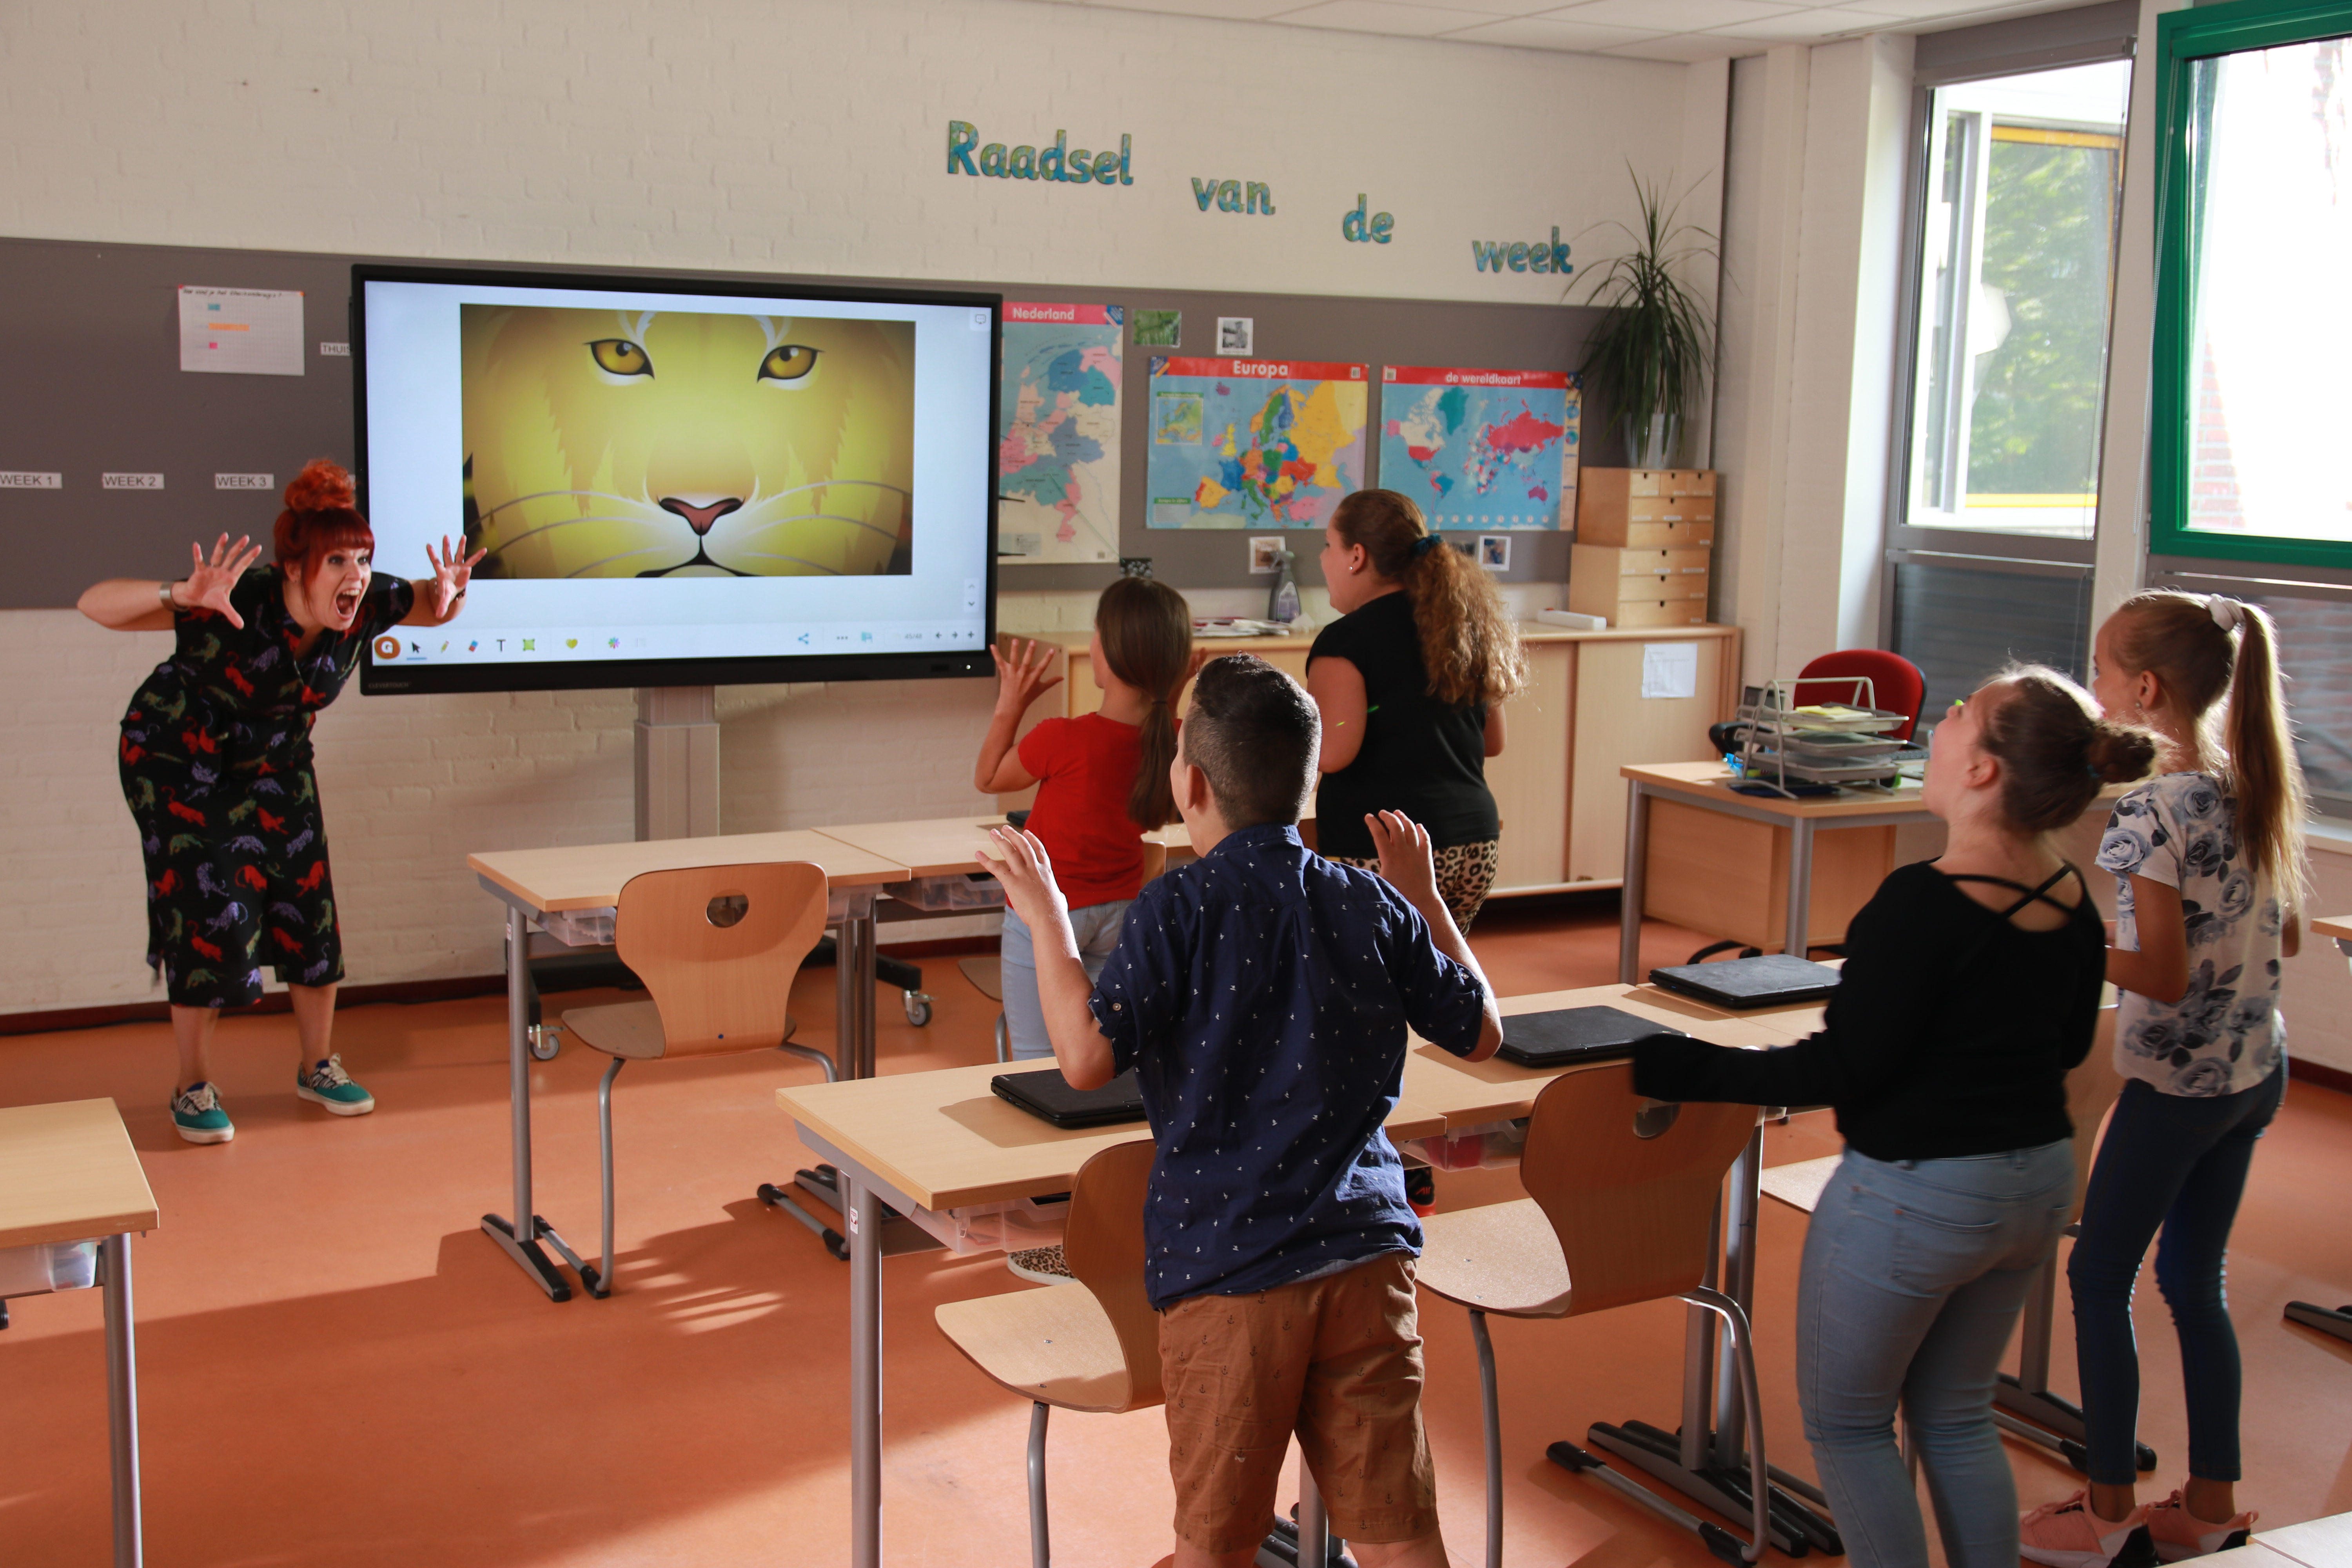 Interactive touchscreen for education (classroom)